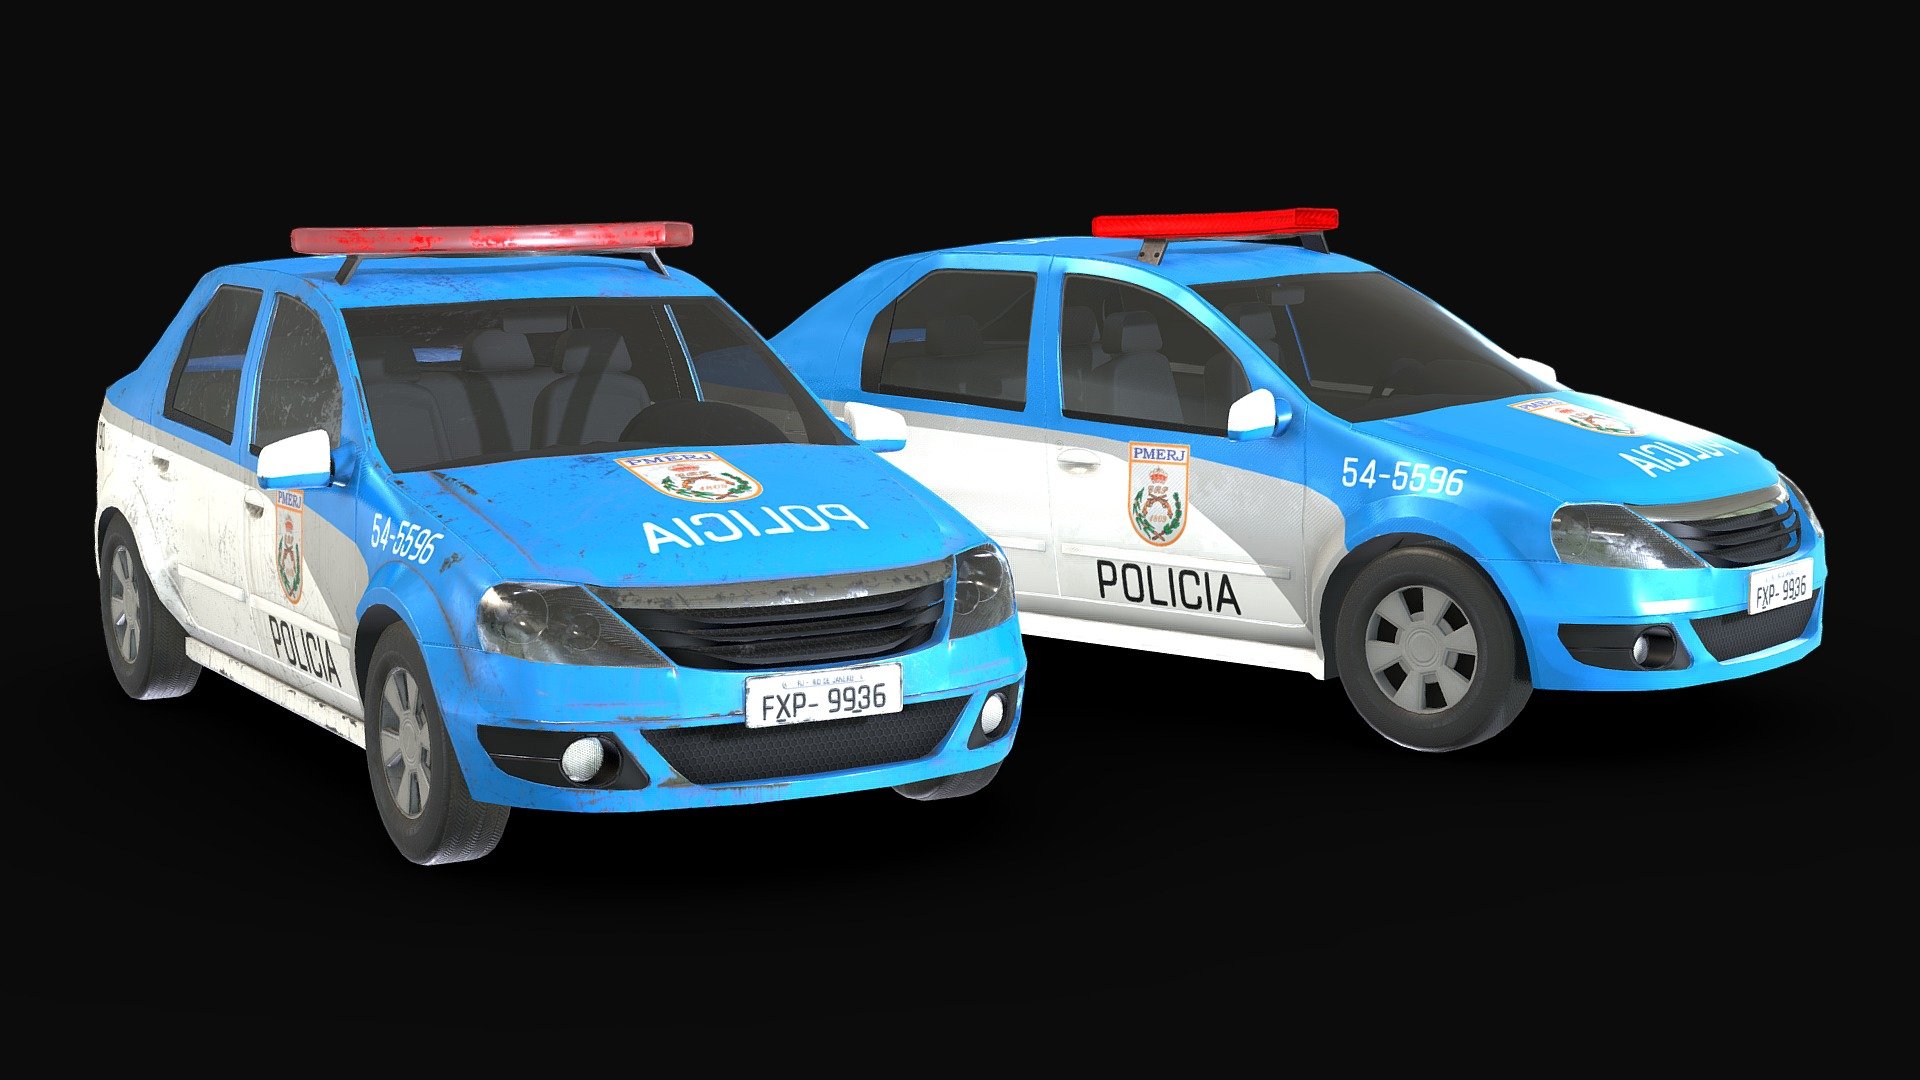 Police car - Rio de Janeiro